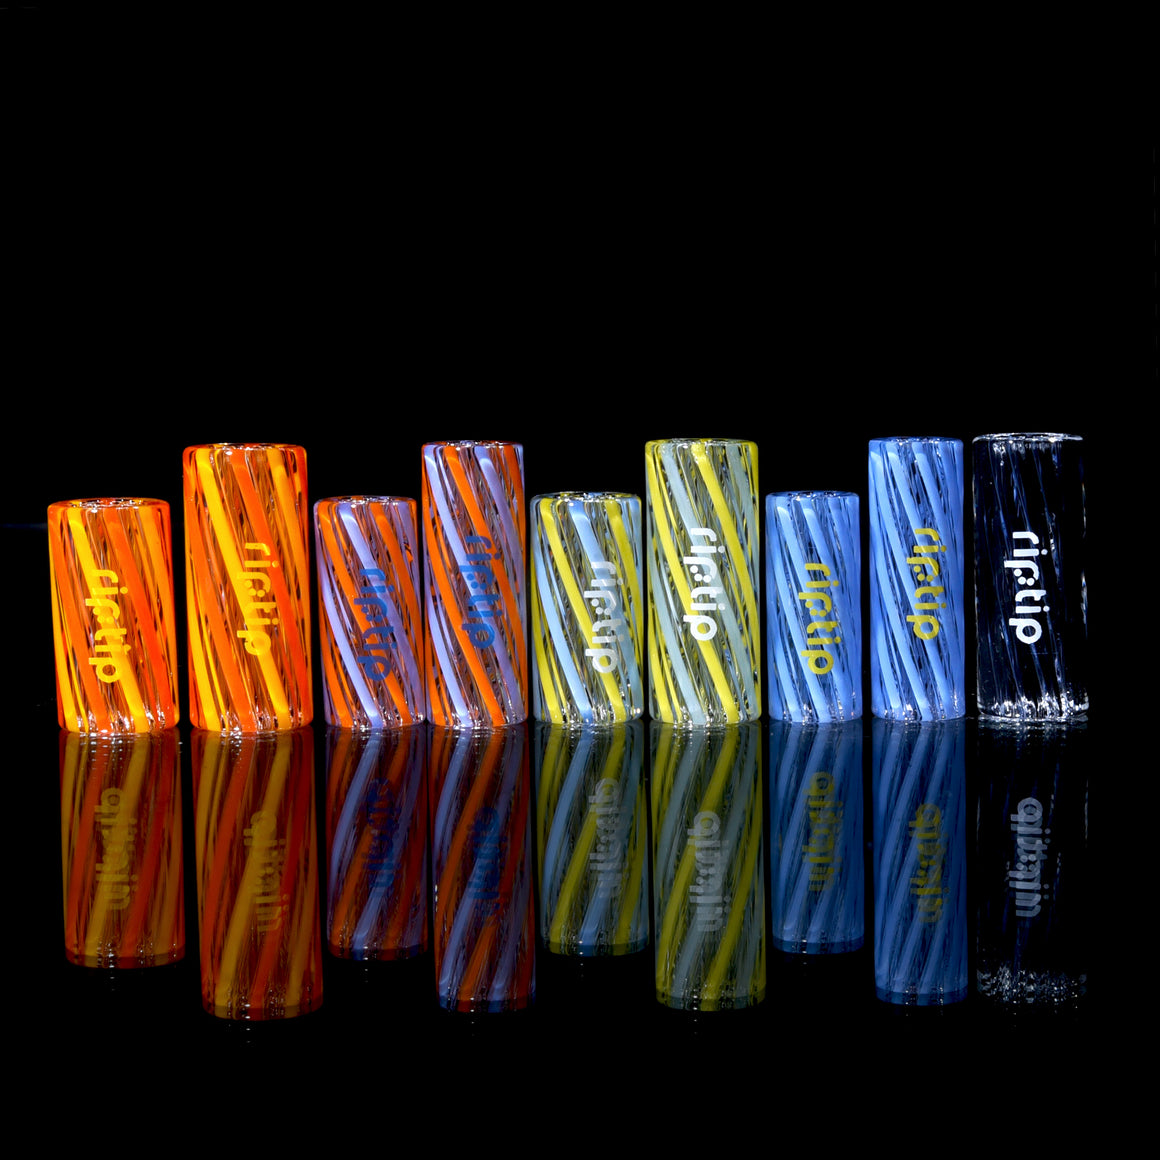 13mm XXL Regular Length RipTip Filter Tips for Blunts, Joints, etc. - Citrus Orange